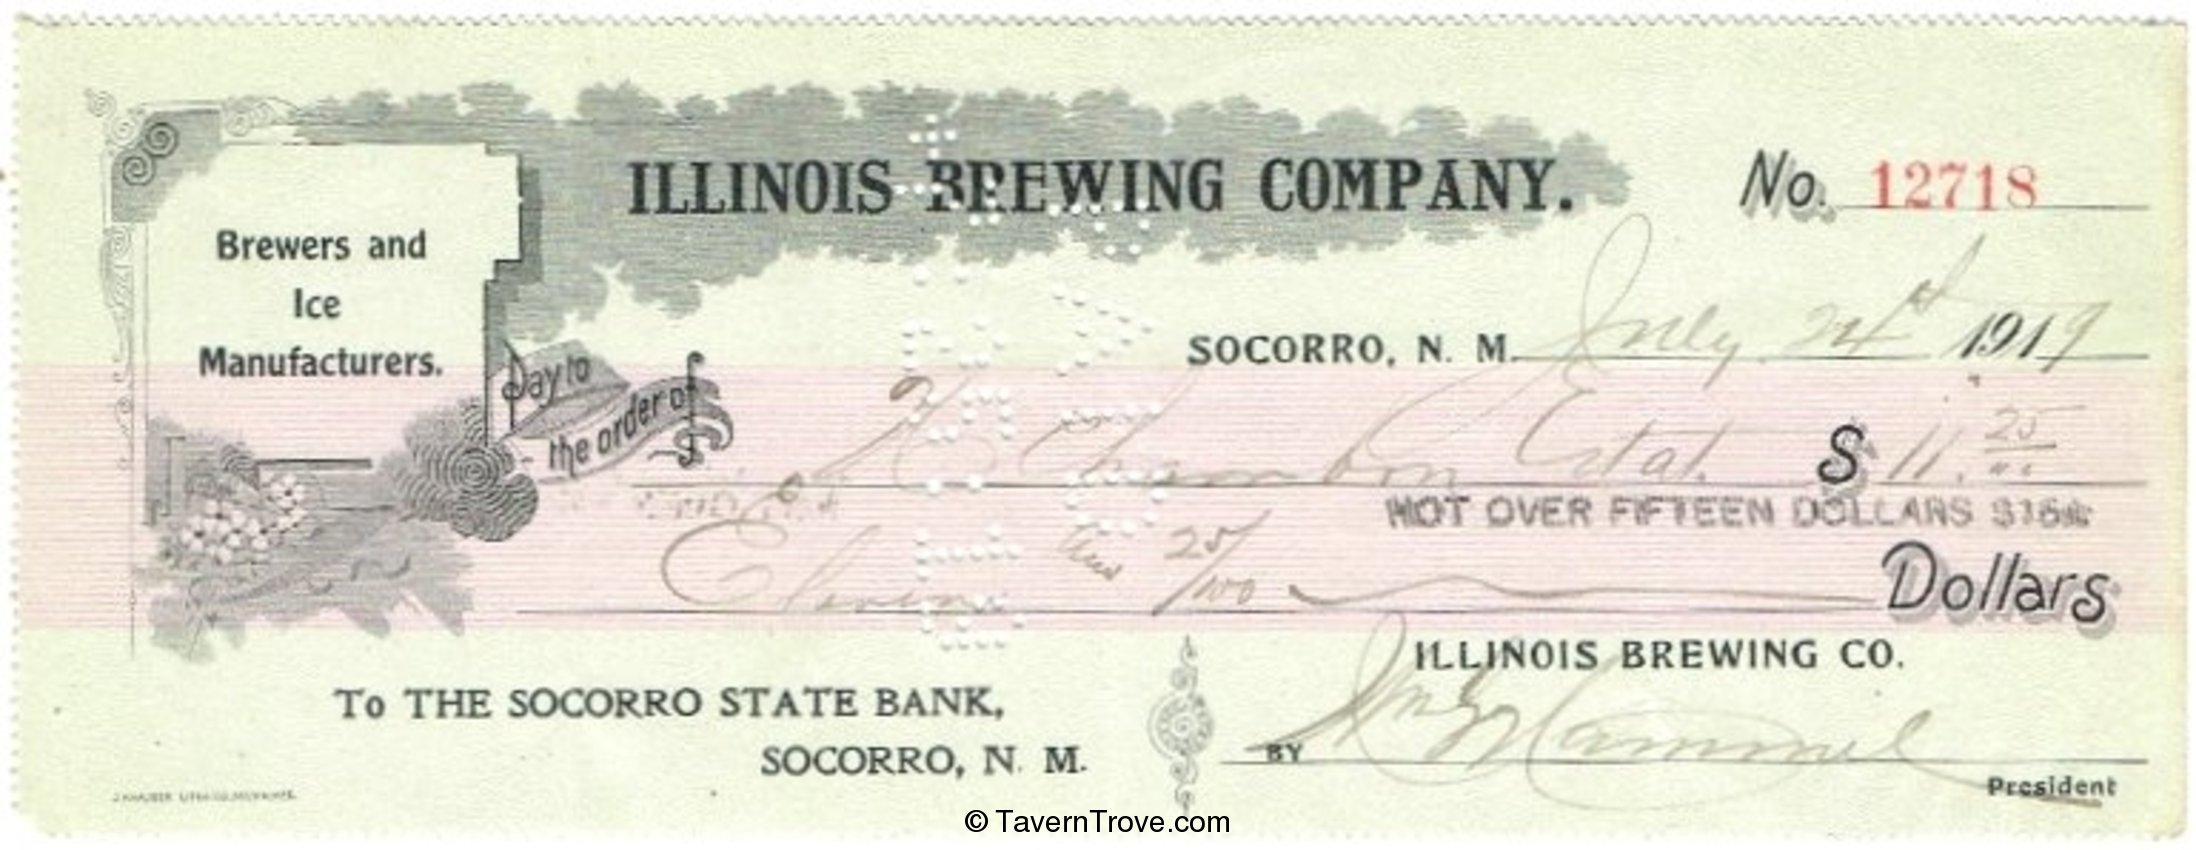 Illinois Brewing Co.